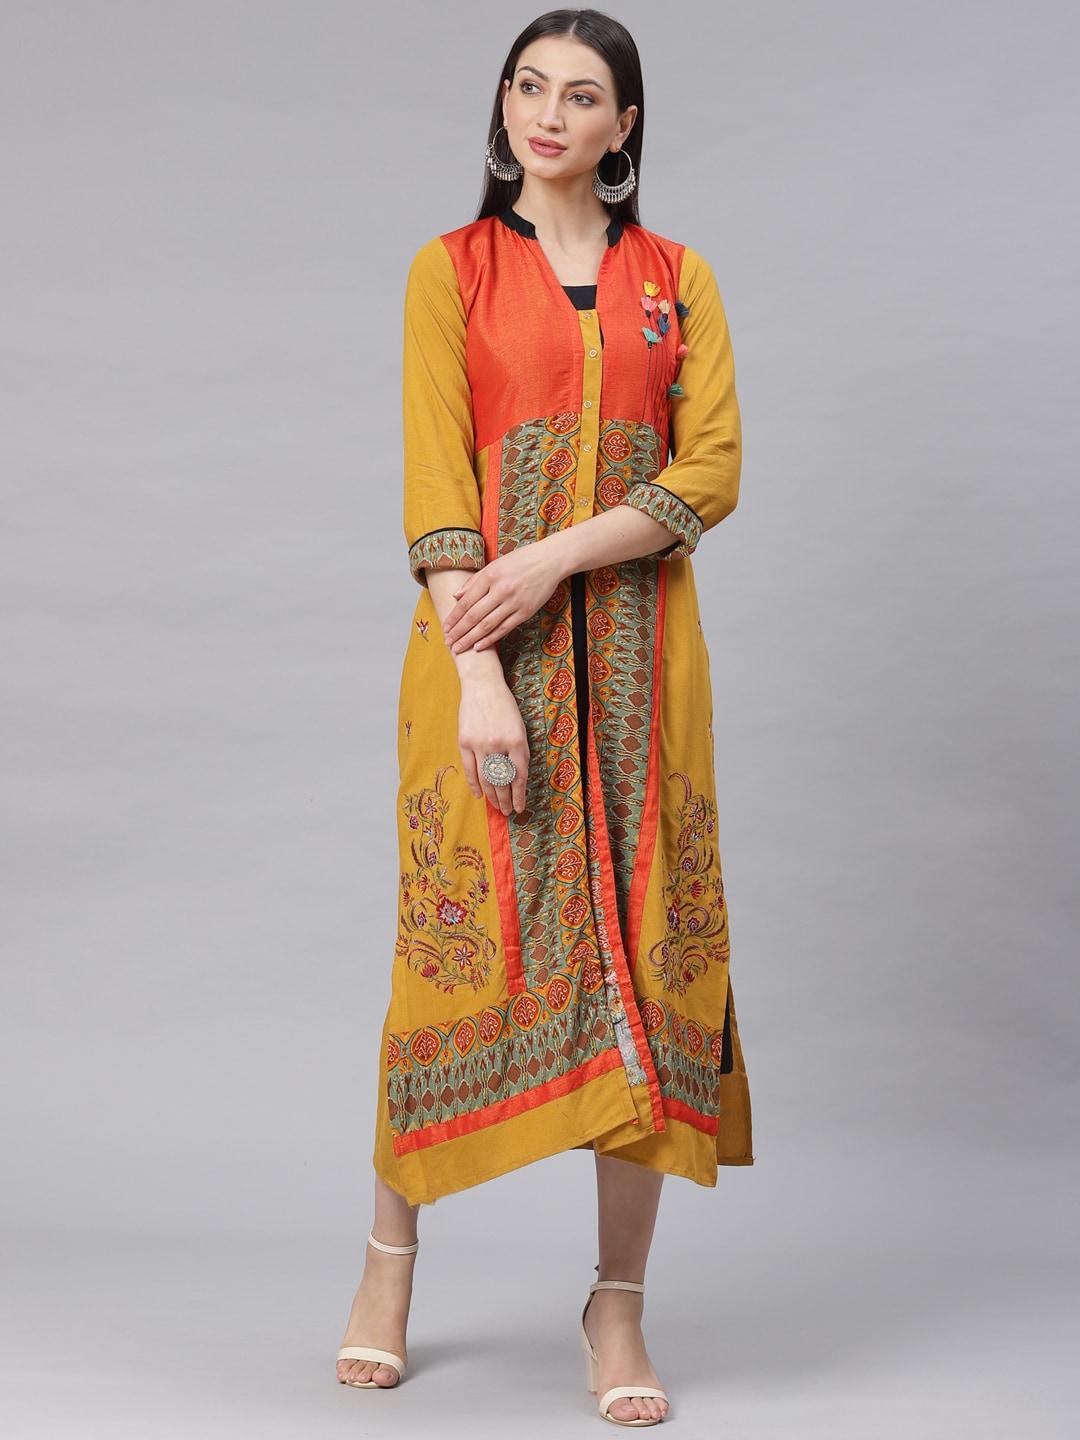 chhabra-555-women-mustard-yellow-&-orange-made-to-measure-printed-layered-maxi-dress